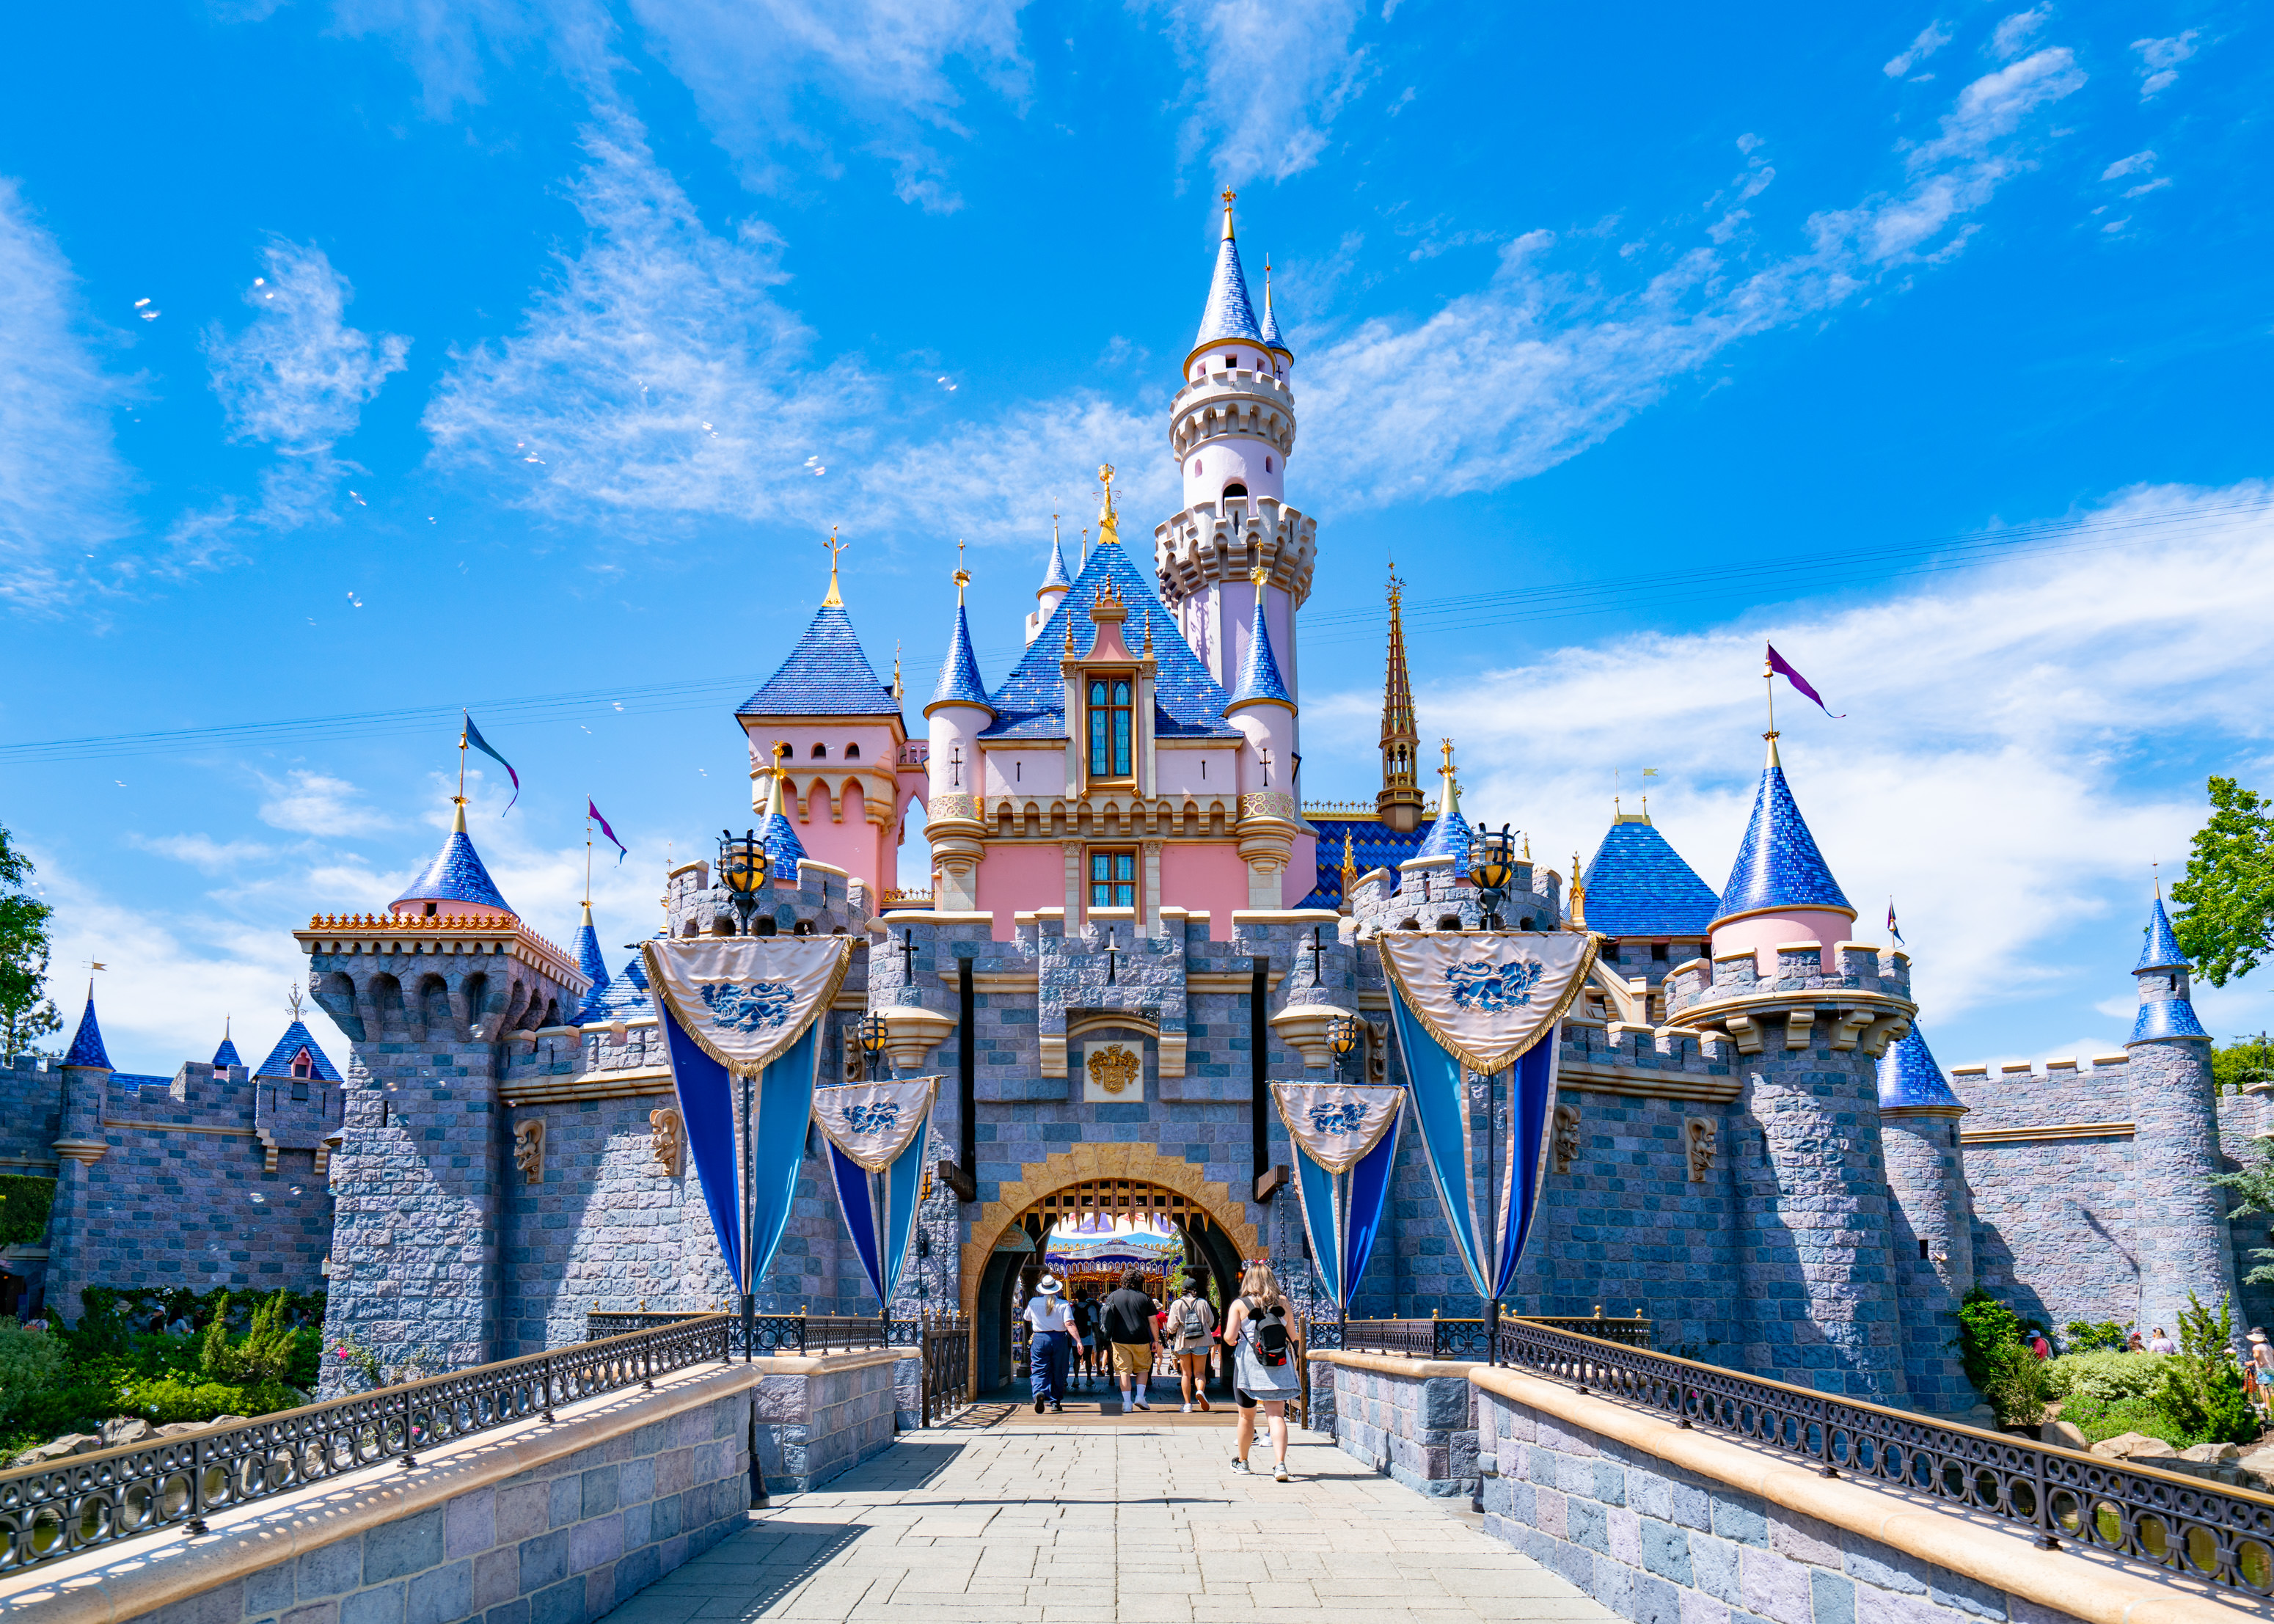 Disneyland Travel insurance coverage